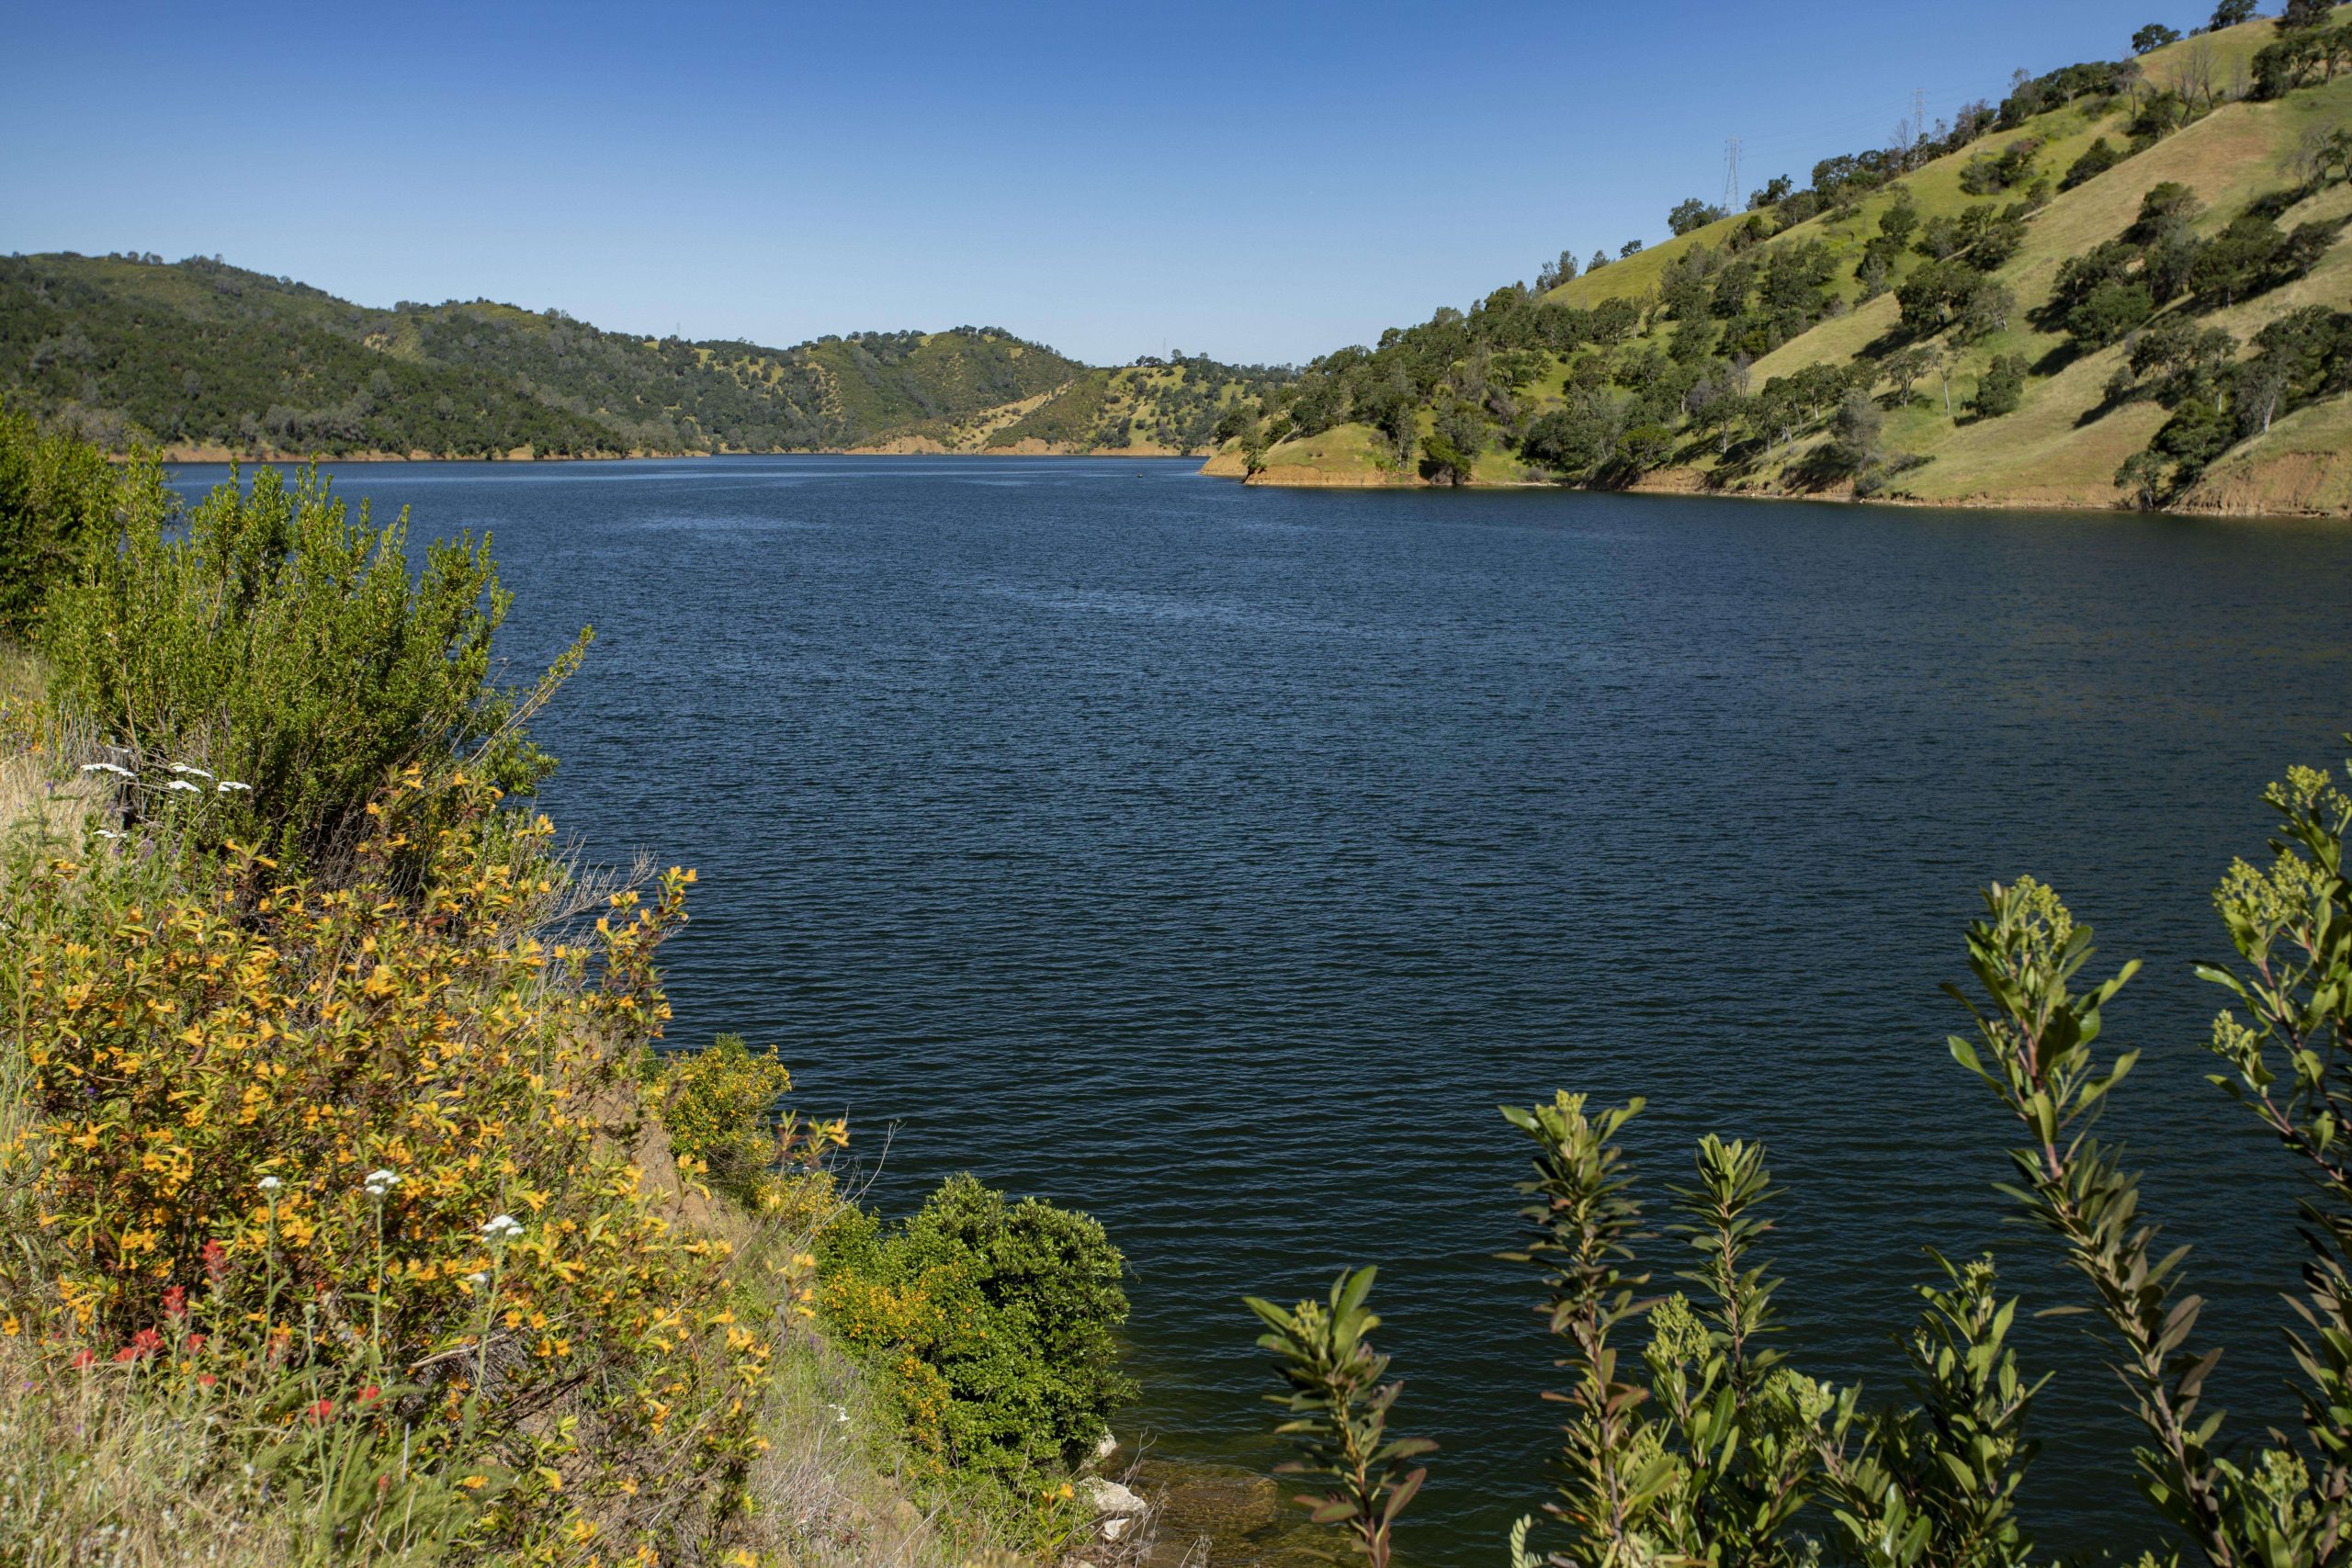 Lake Berryessa is a 20,700 acre lake in Napa County, California. 